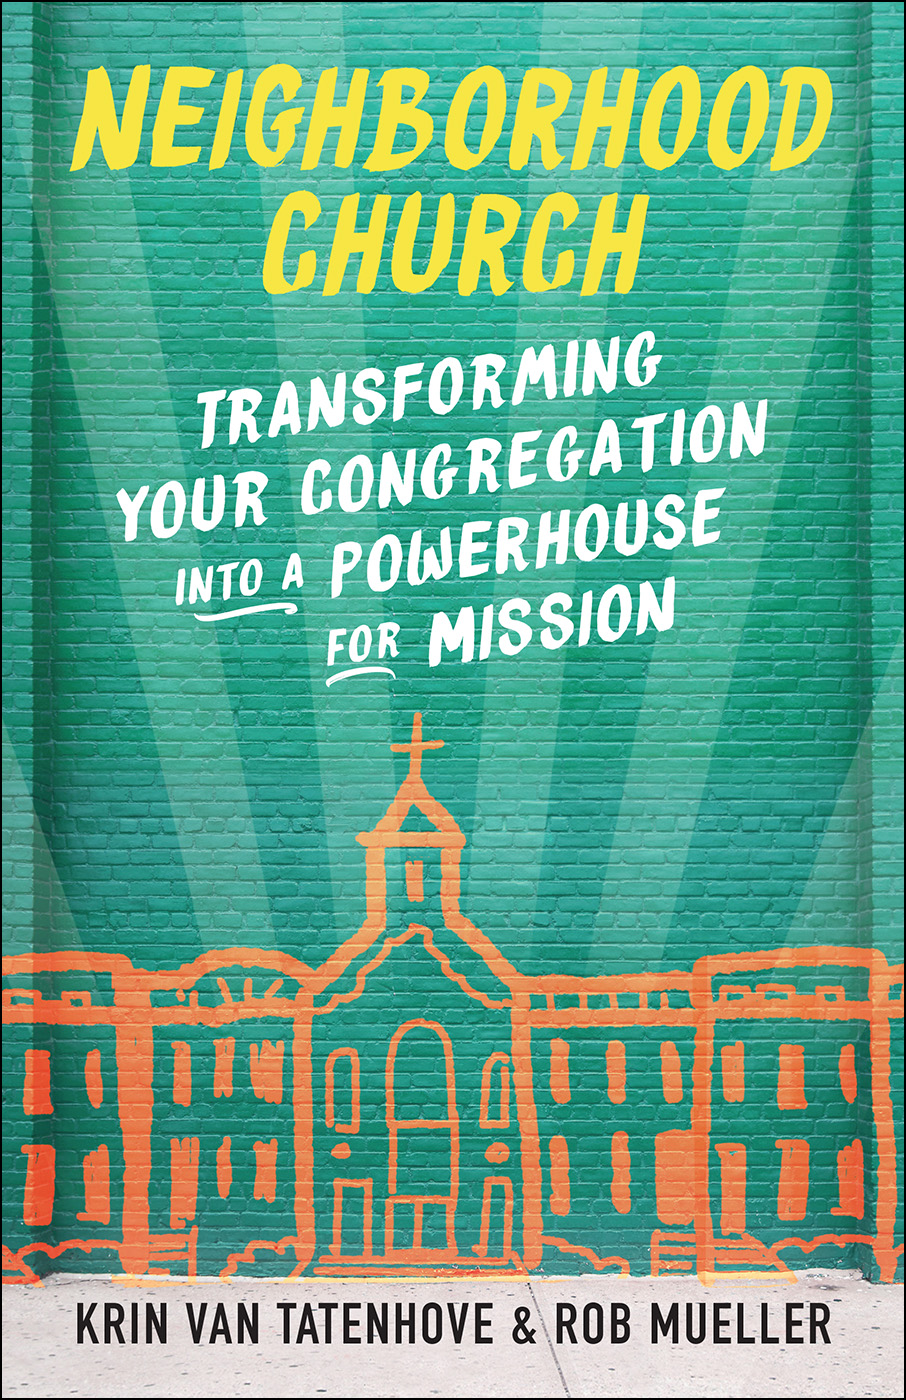 book cover - neighborhood church